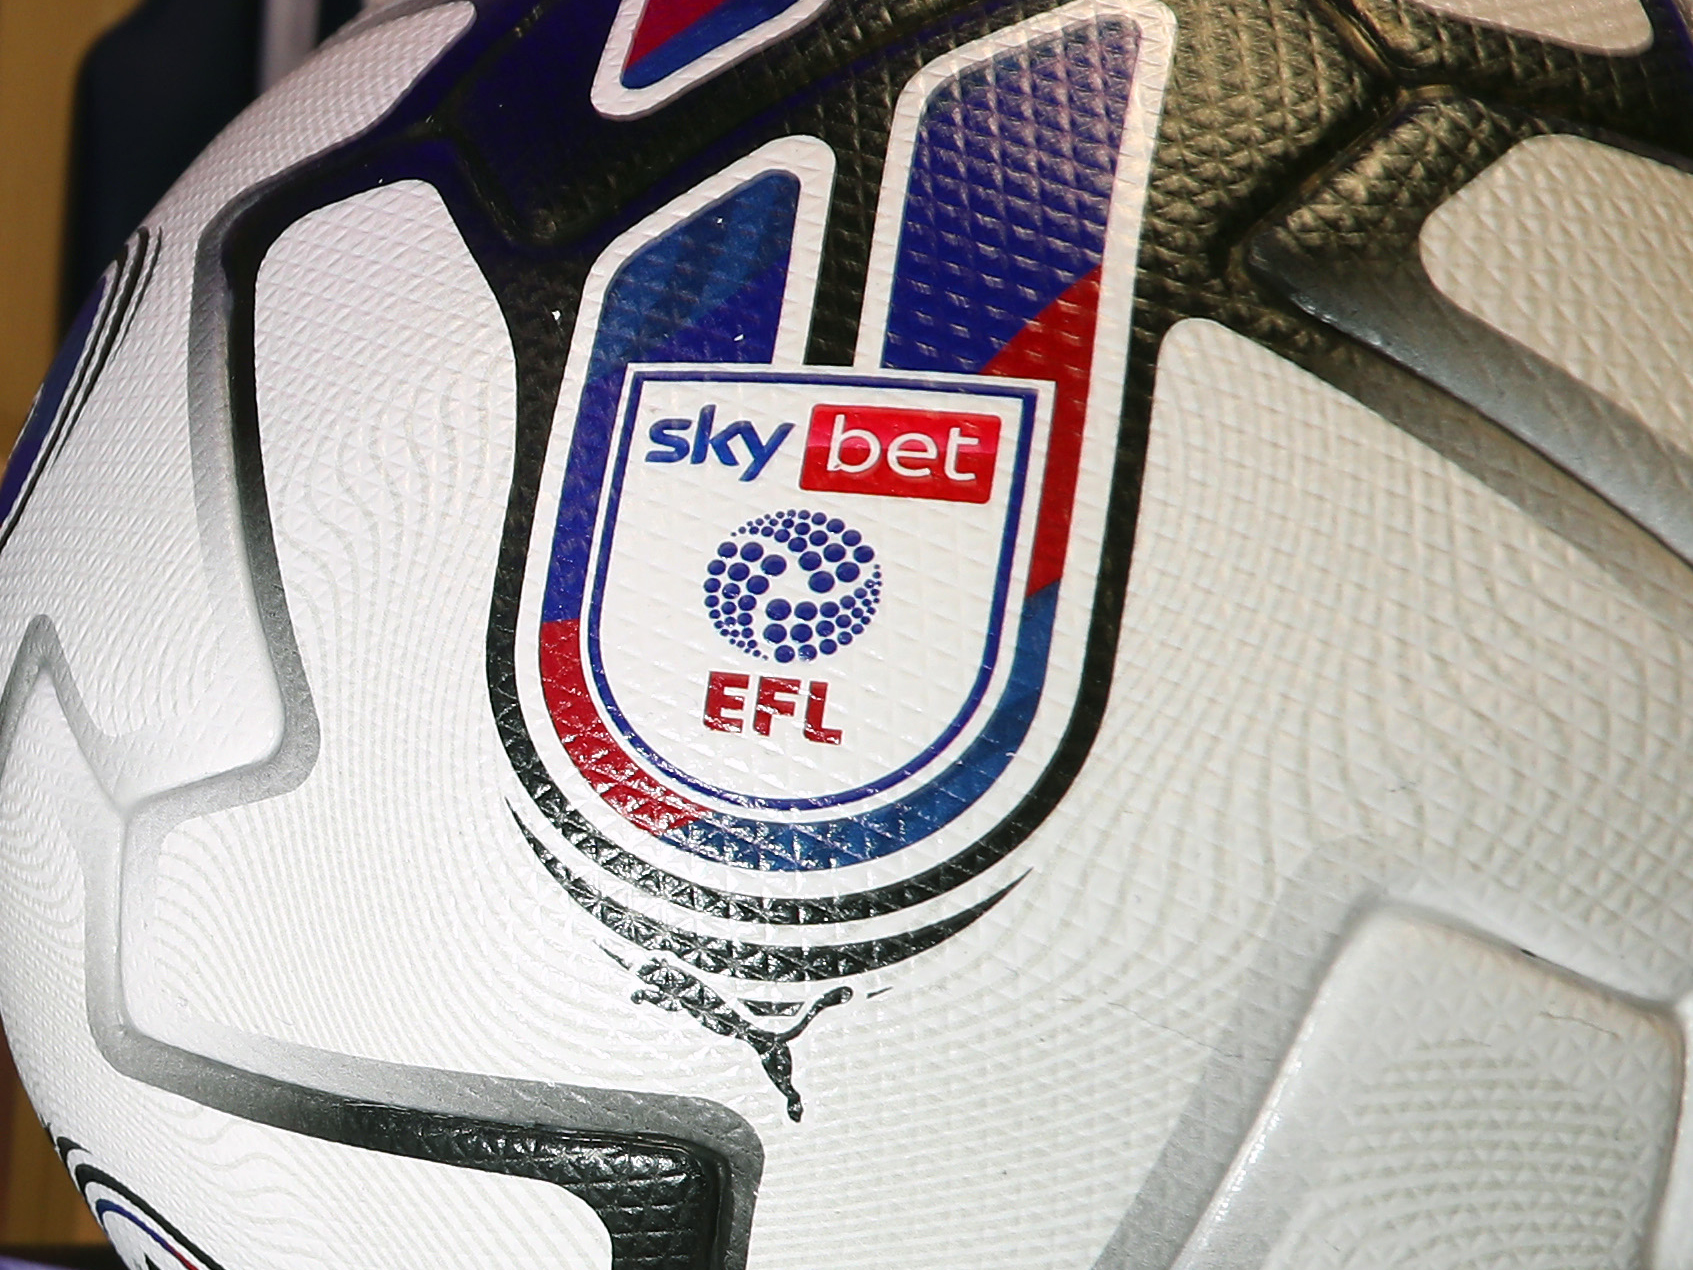 A Sky Bet logo on a football